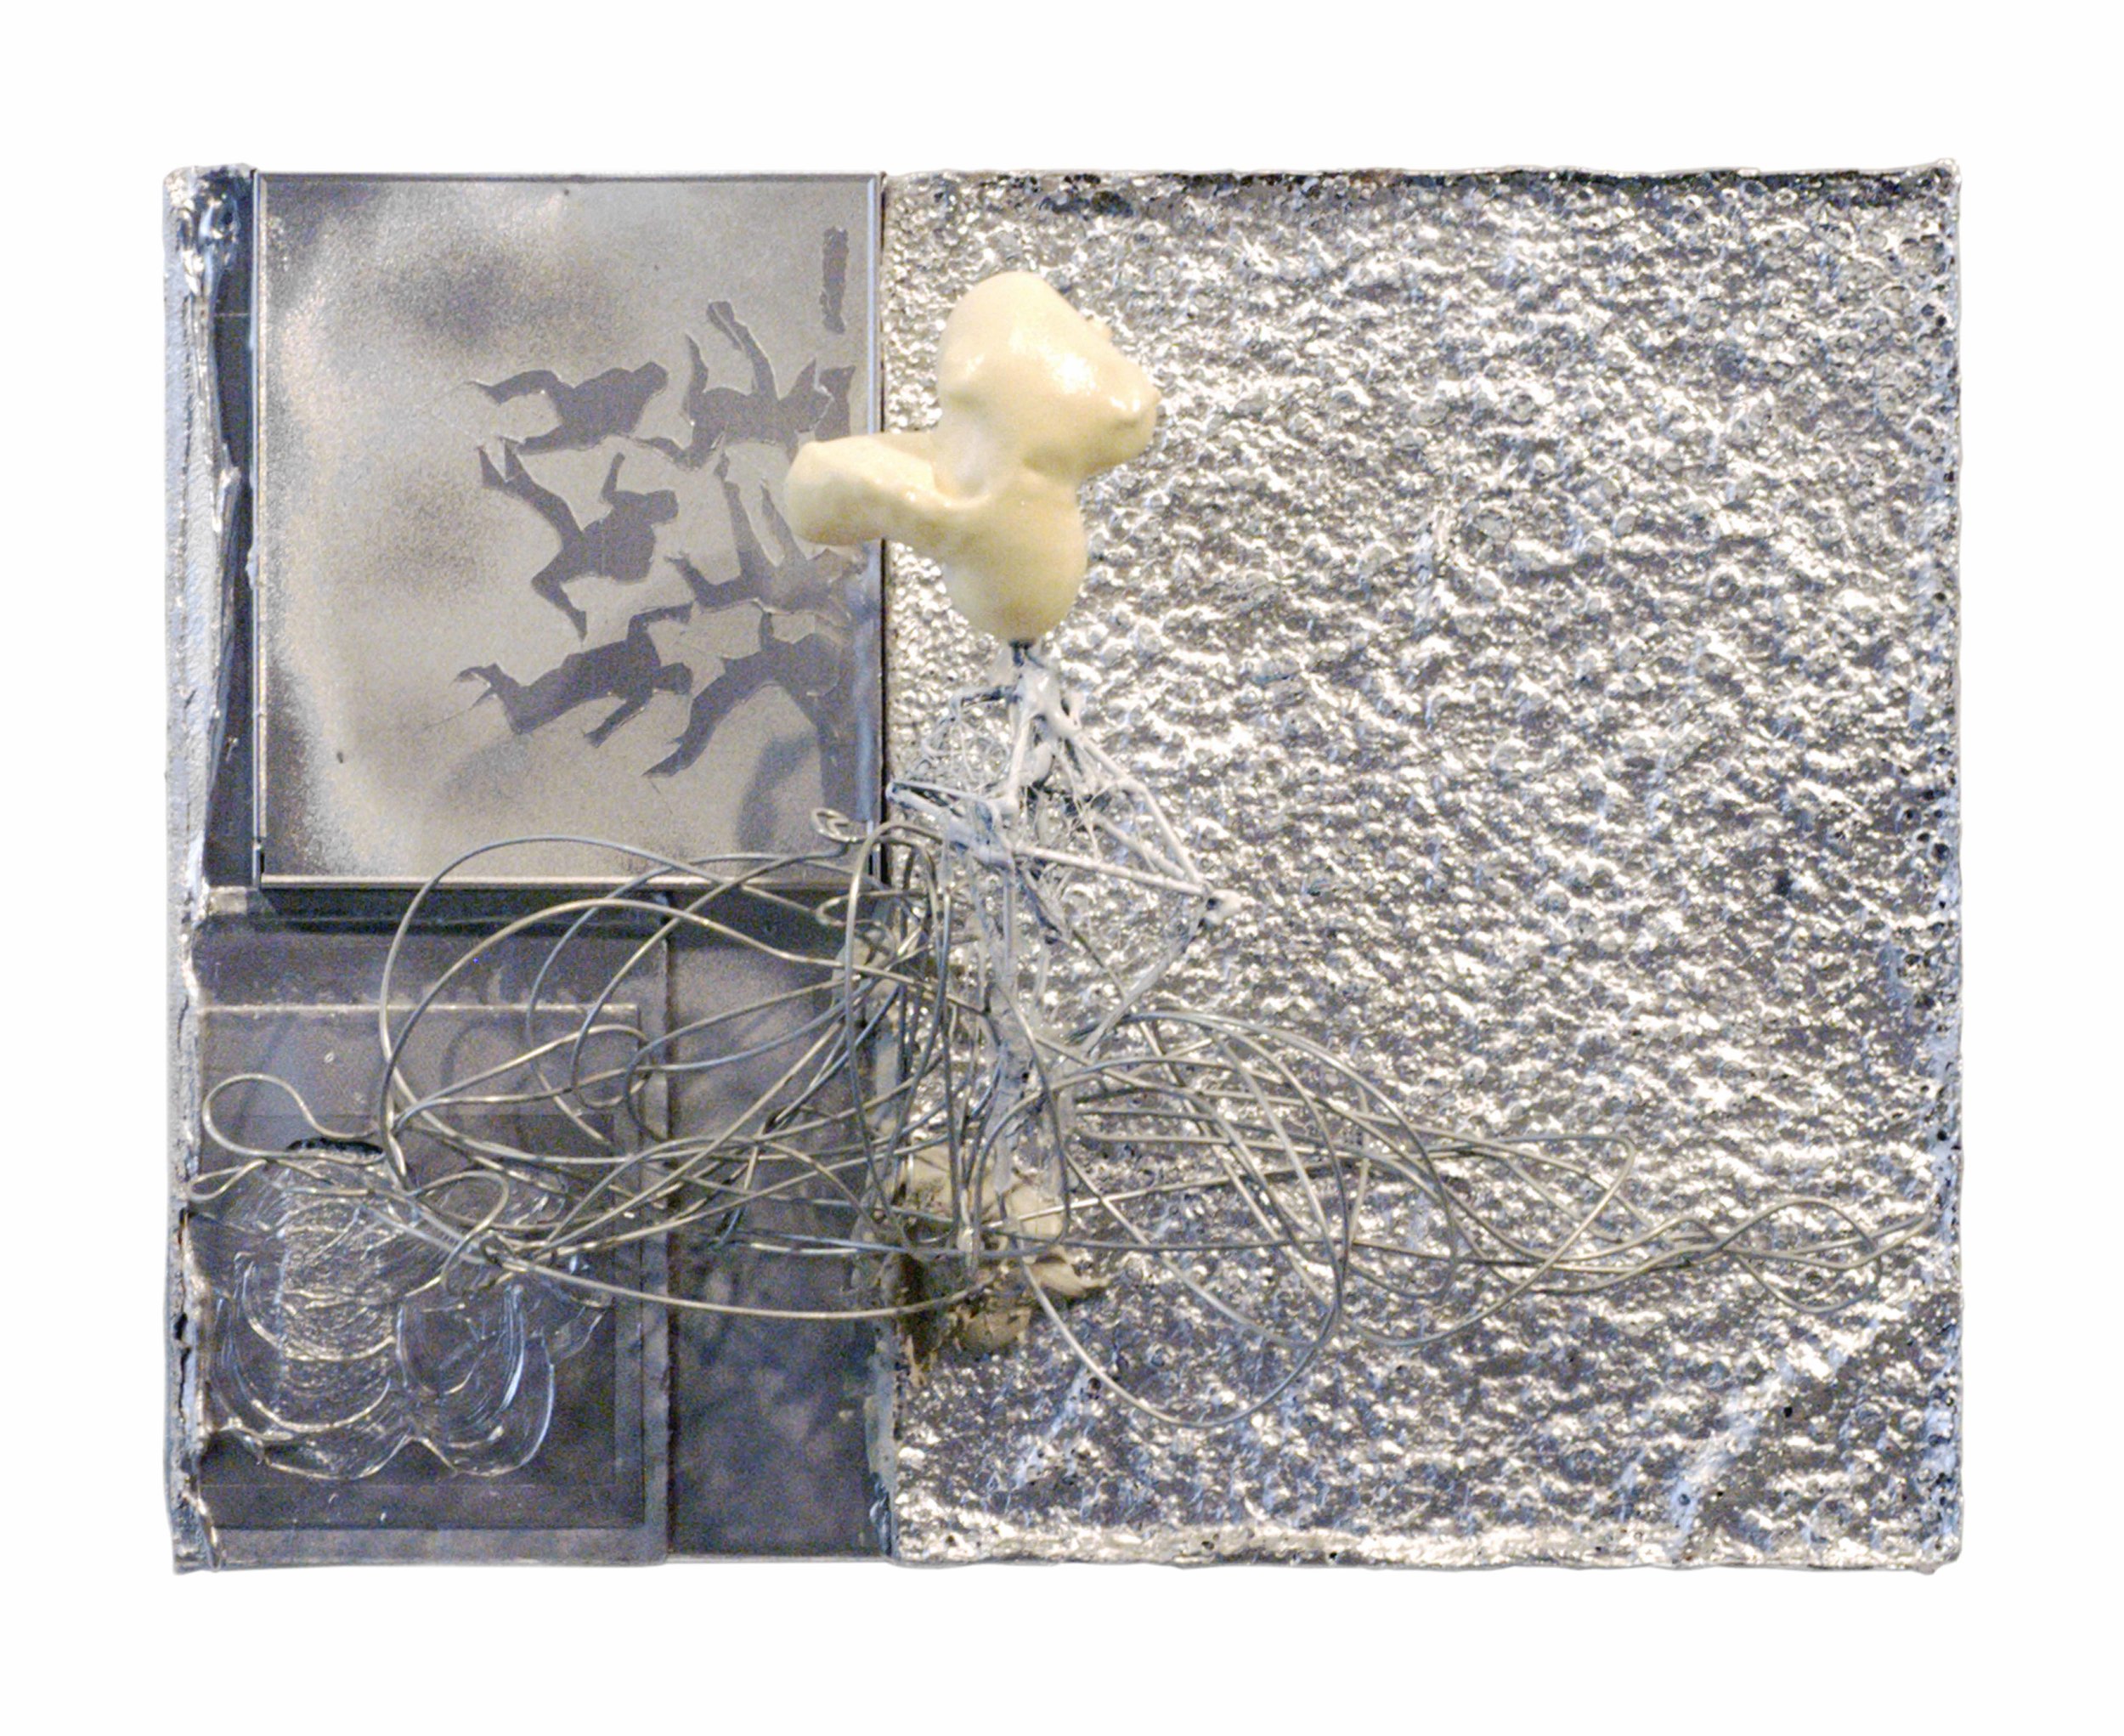  Drew Beattie  Silver Death  2006 CD case, bondo, tape, styrofoam, polaroid, spray paint, wire, toothpicks, hot glue and industrial foam on canvas&nbsp; 11 x 14 inches 